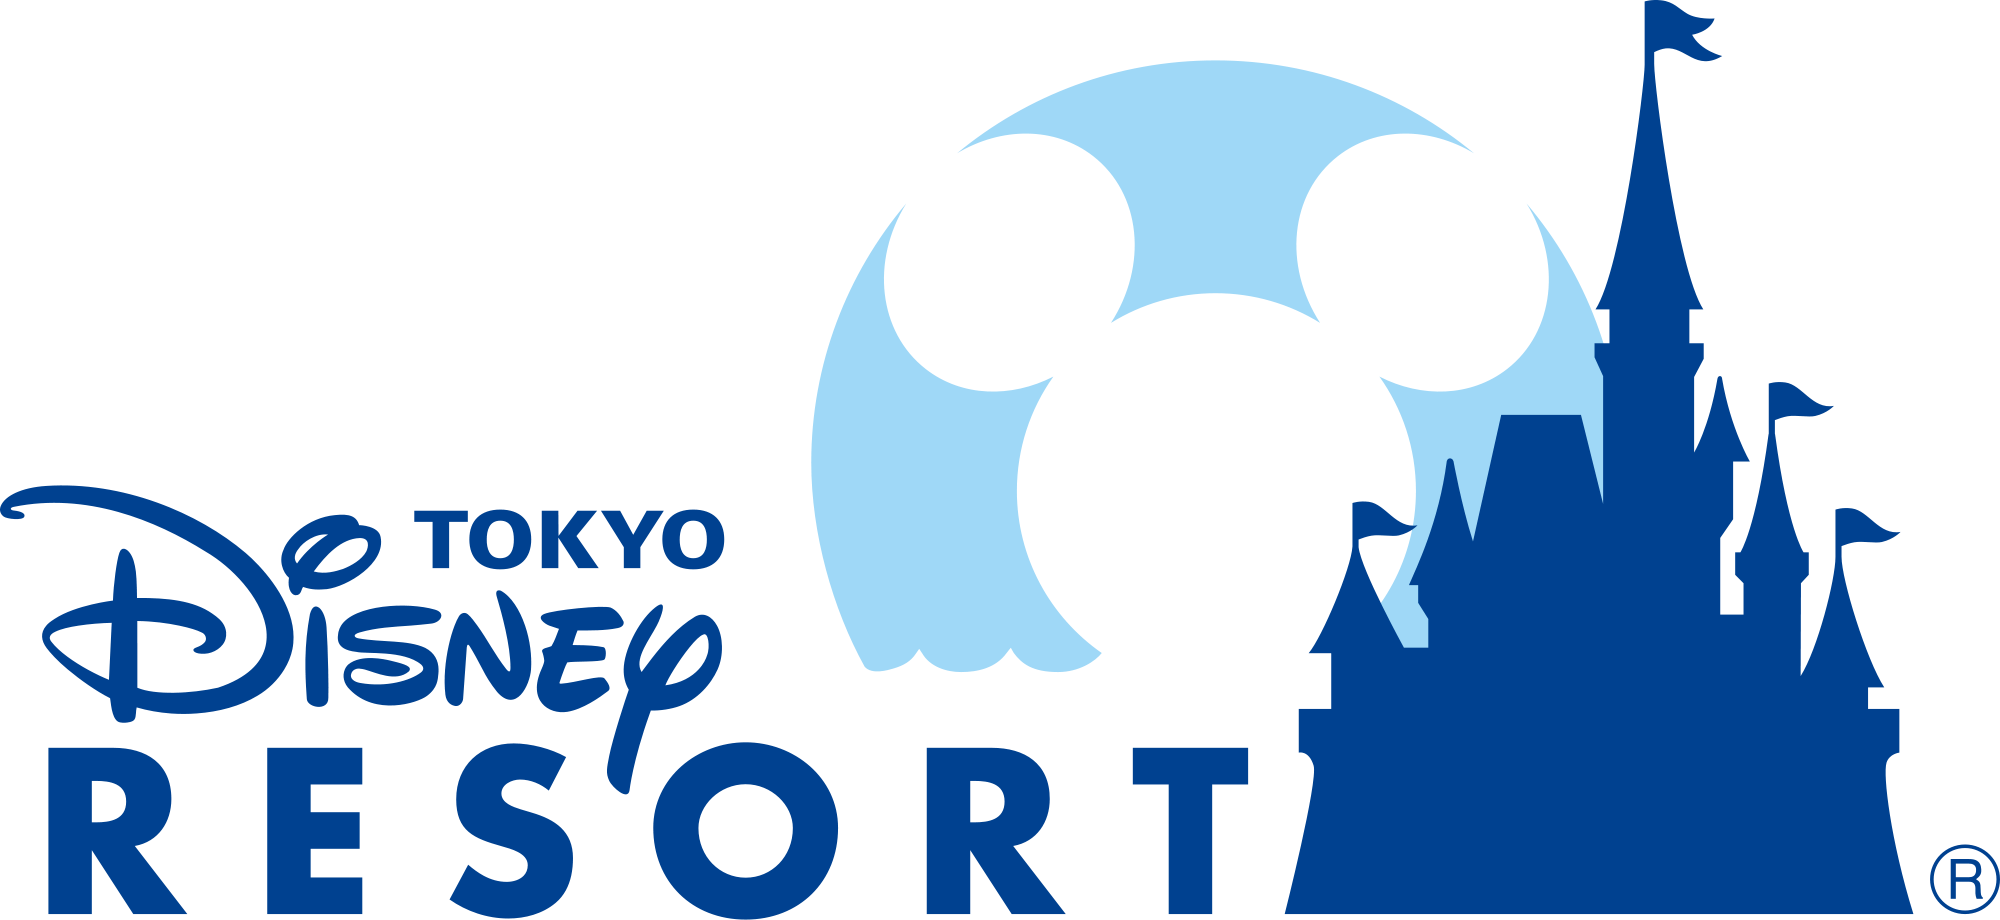 Tokyo Disneyland Logo - Tokyo Disney Resort